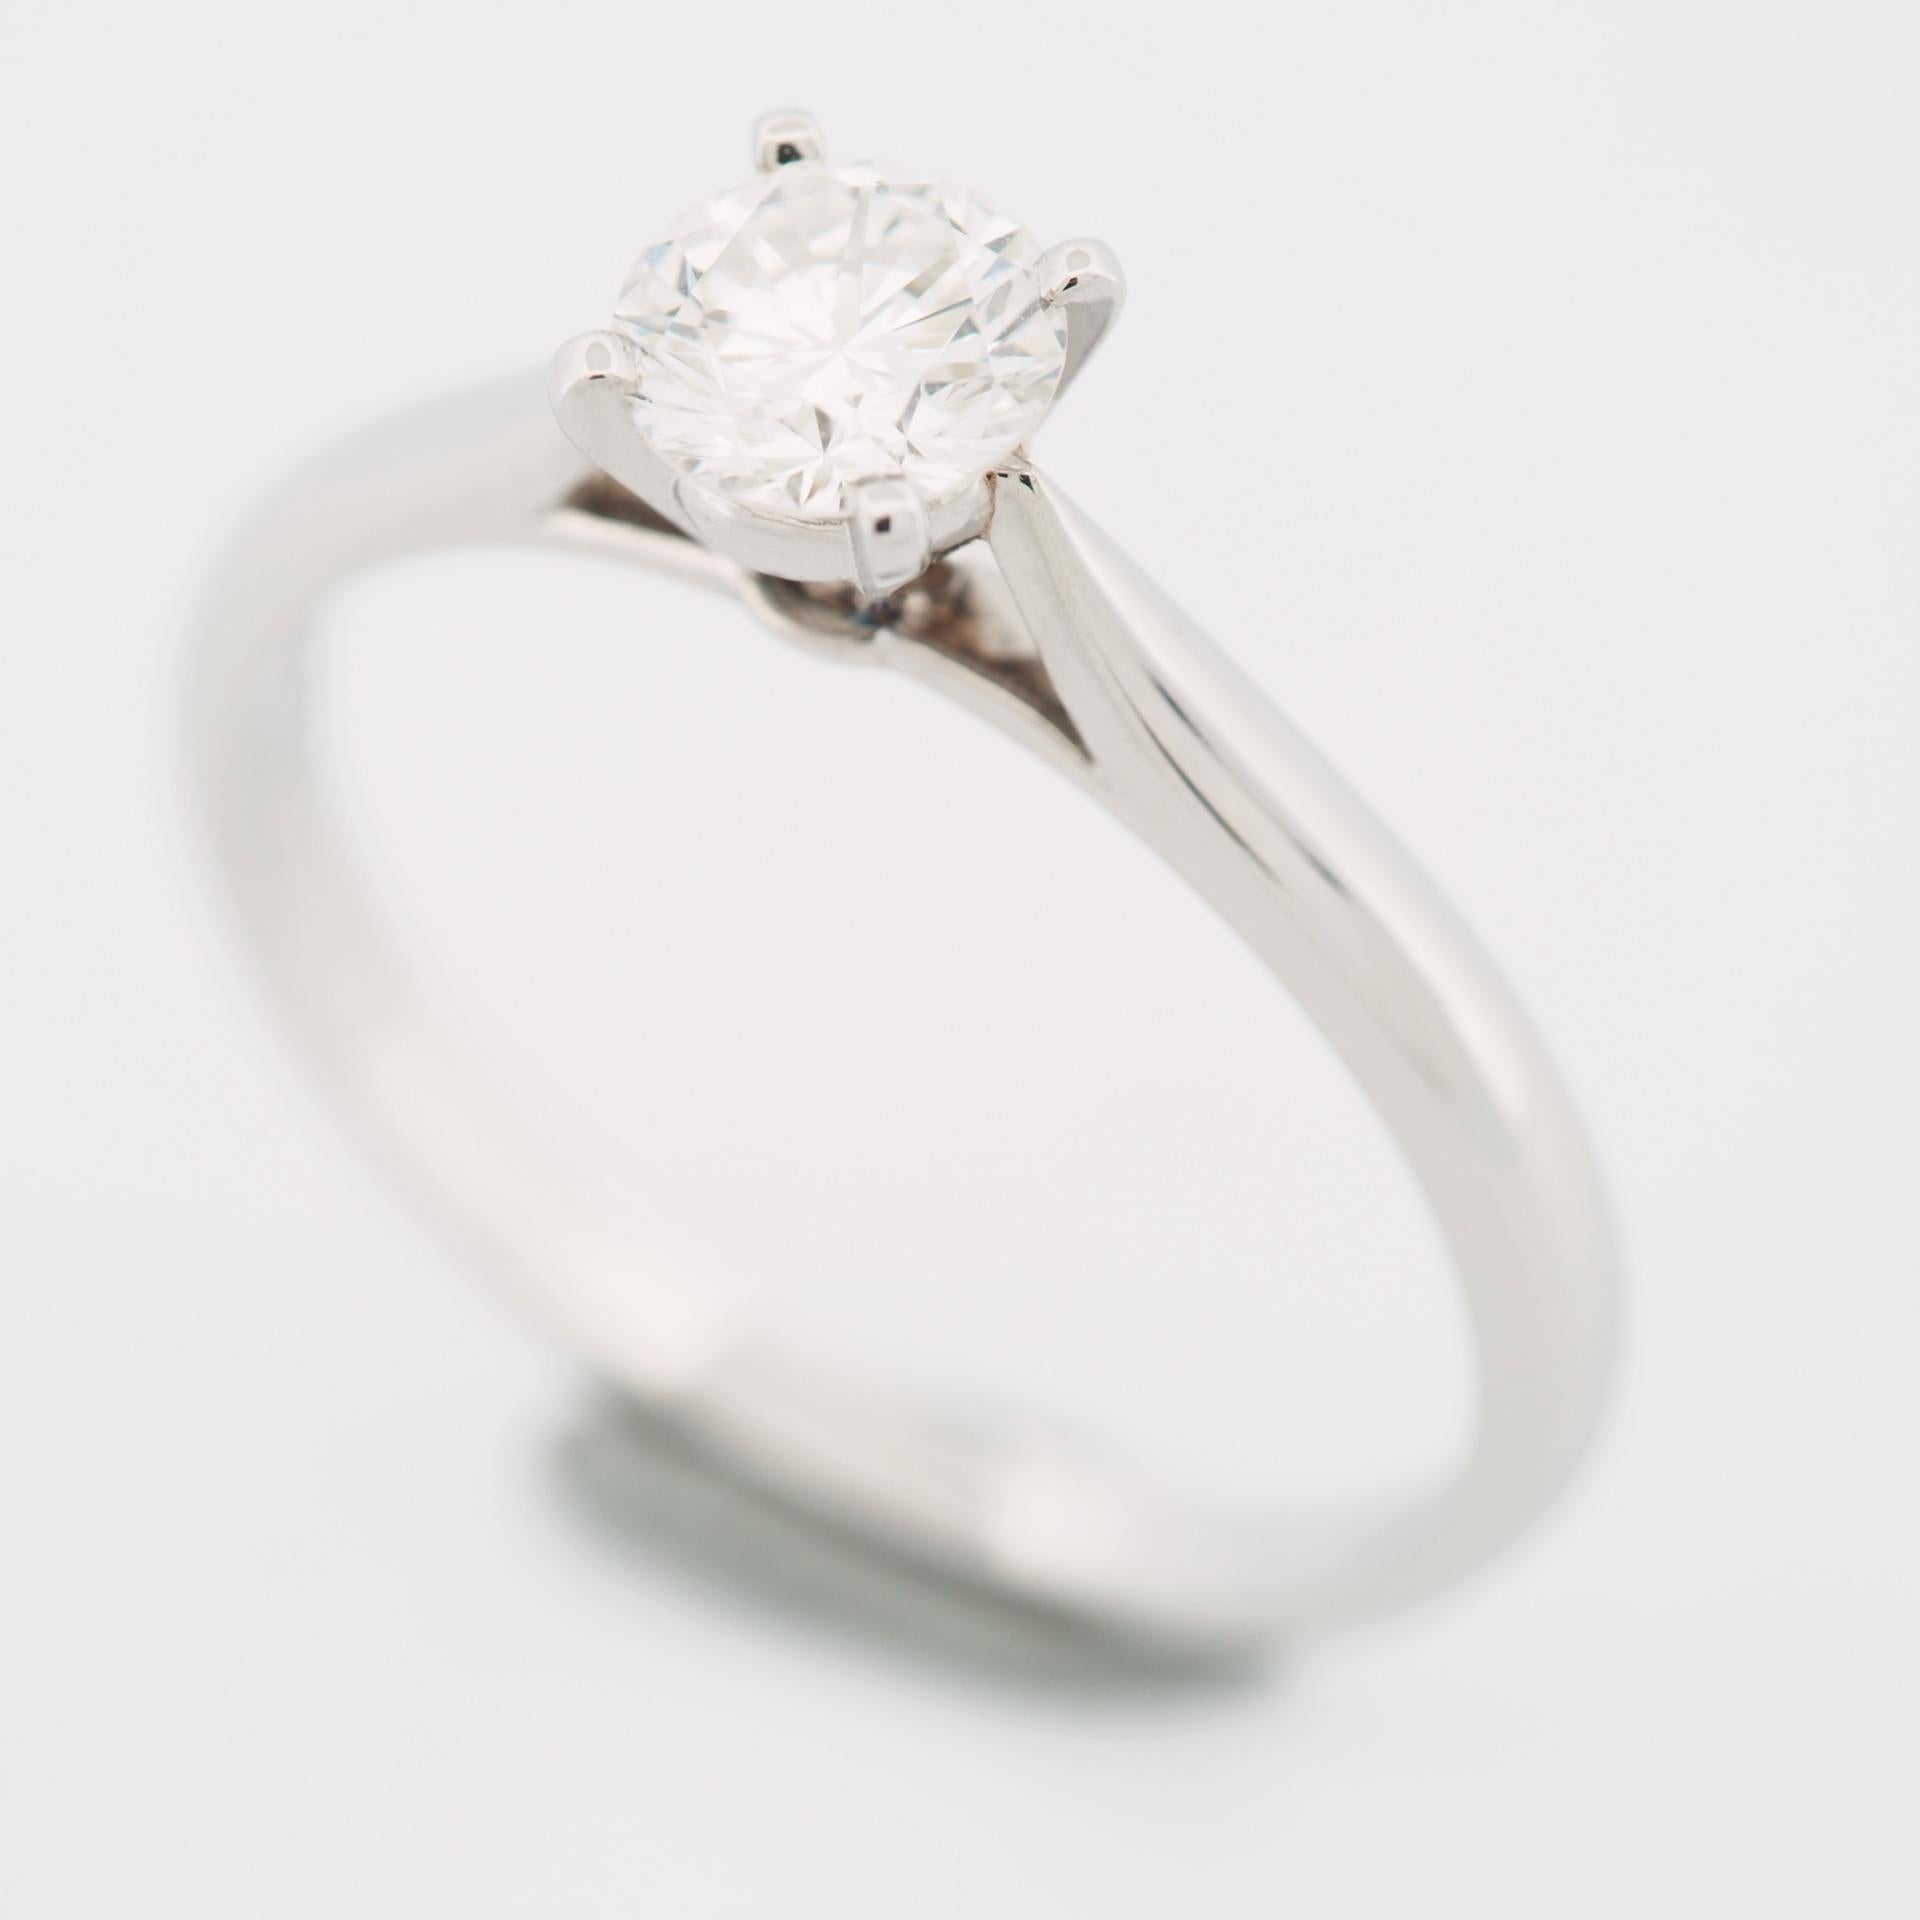 Item: Authentic Cartier 1895 Diamond Solitaire Ring
Stones: Diamond (0.41ct)
Color: G
Clarity:VVS2
Polish: Very Good
Symmetry: Very Good
Fluorescence: Faint
Metal: Platinum 950
Ring Size: 49 US SIZE 4.5 UK SIZE I 1/2
Internal Diameter: 15.45